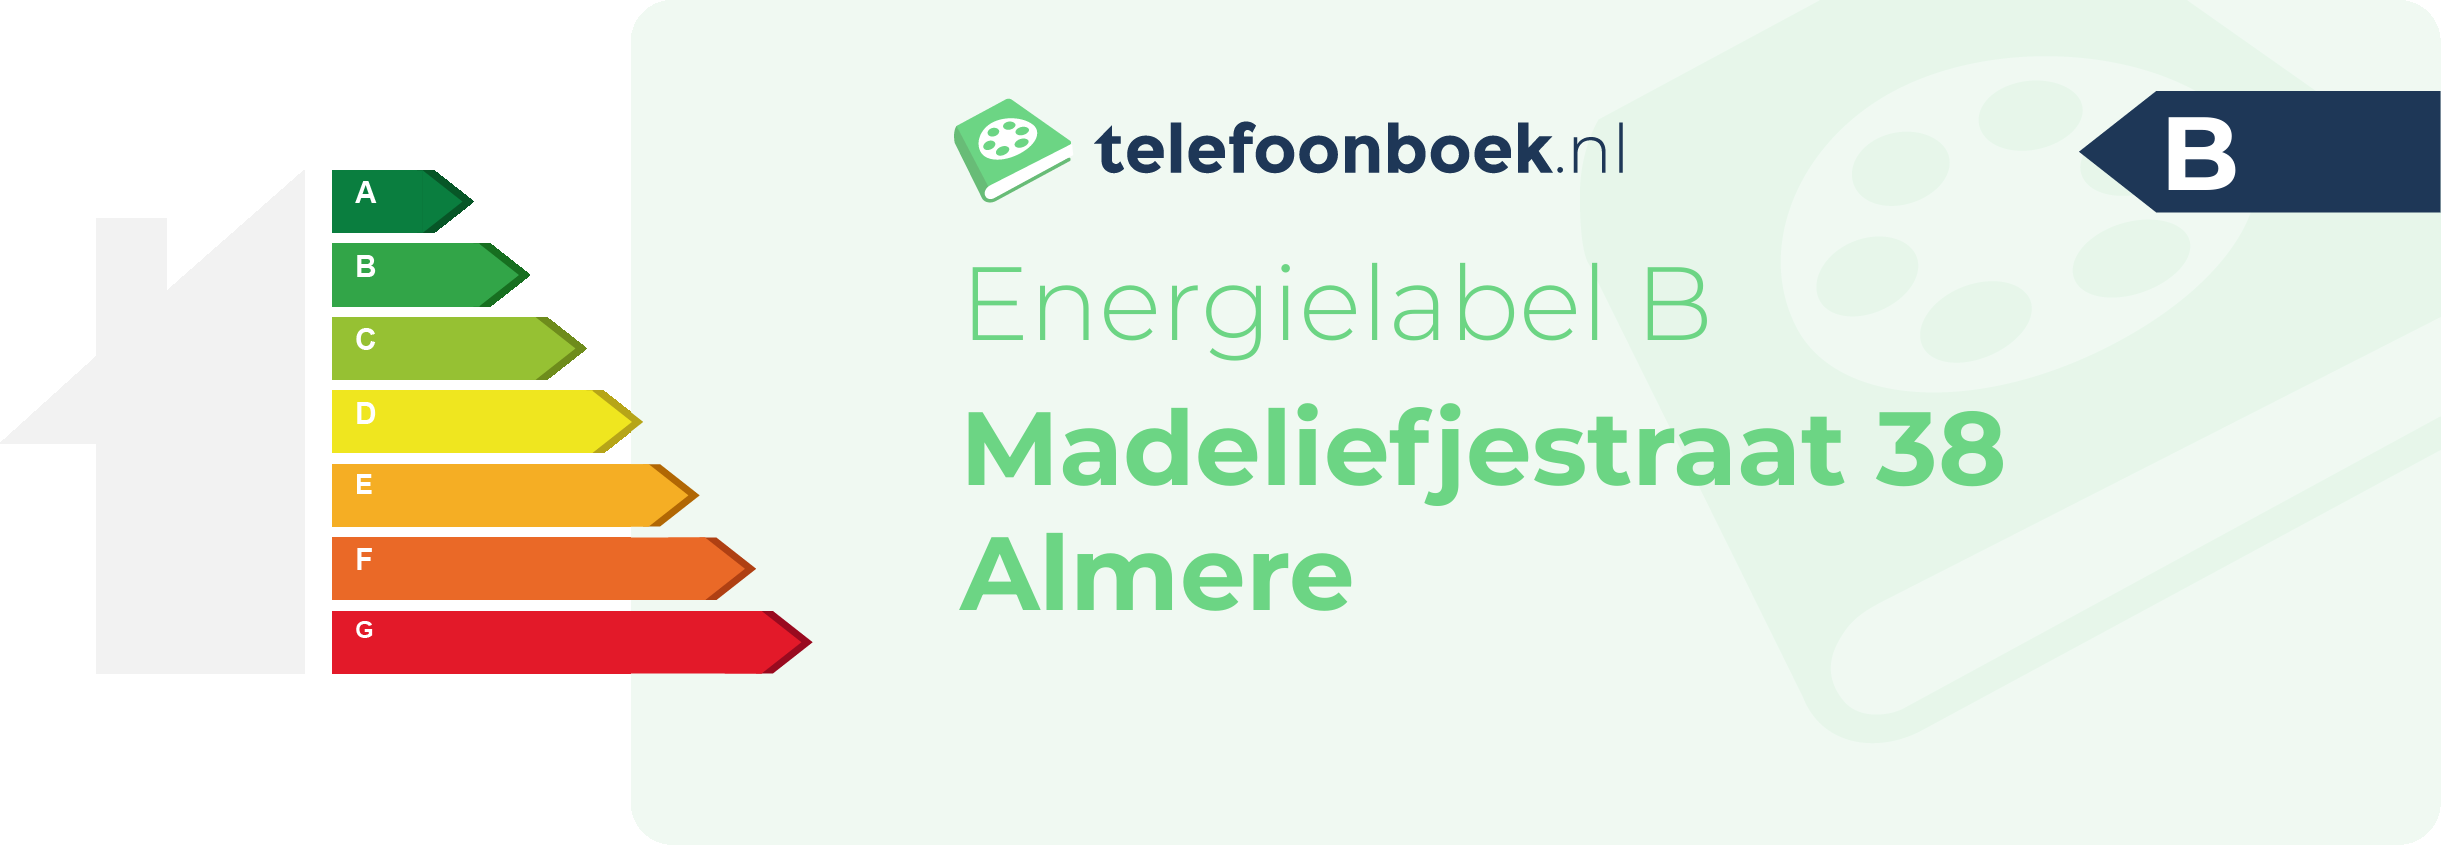 Energielabel Madeliefjestraat 38 Almere